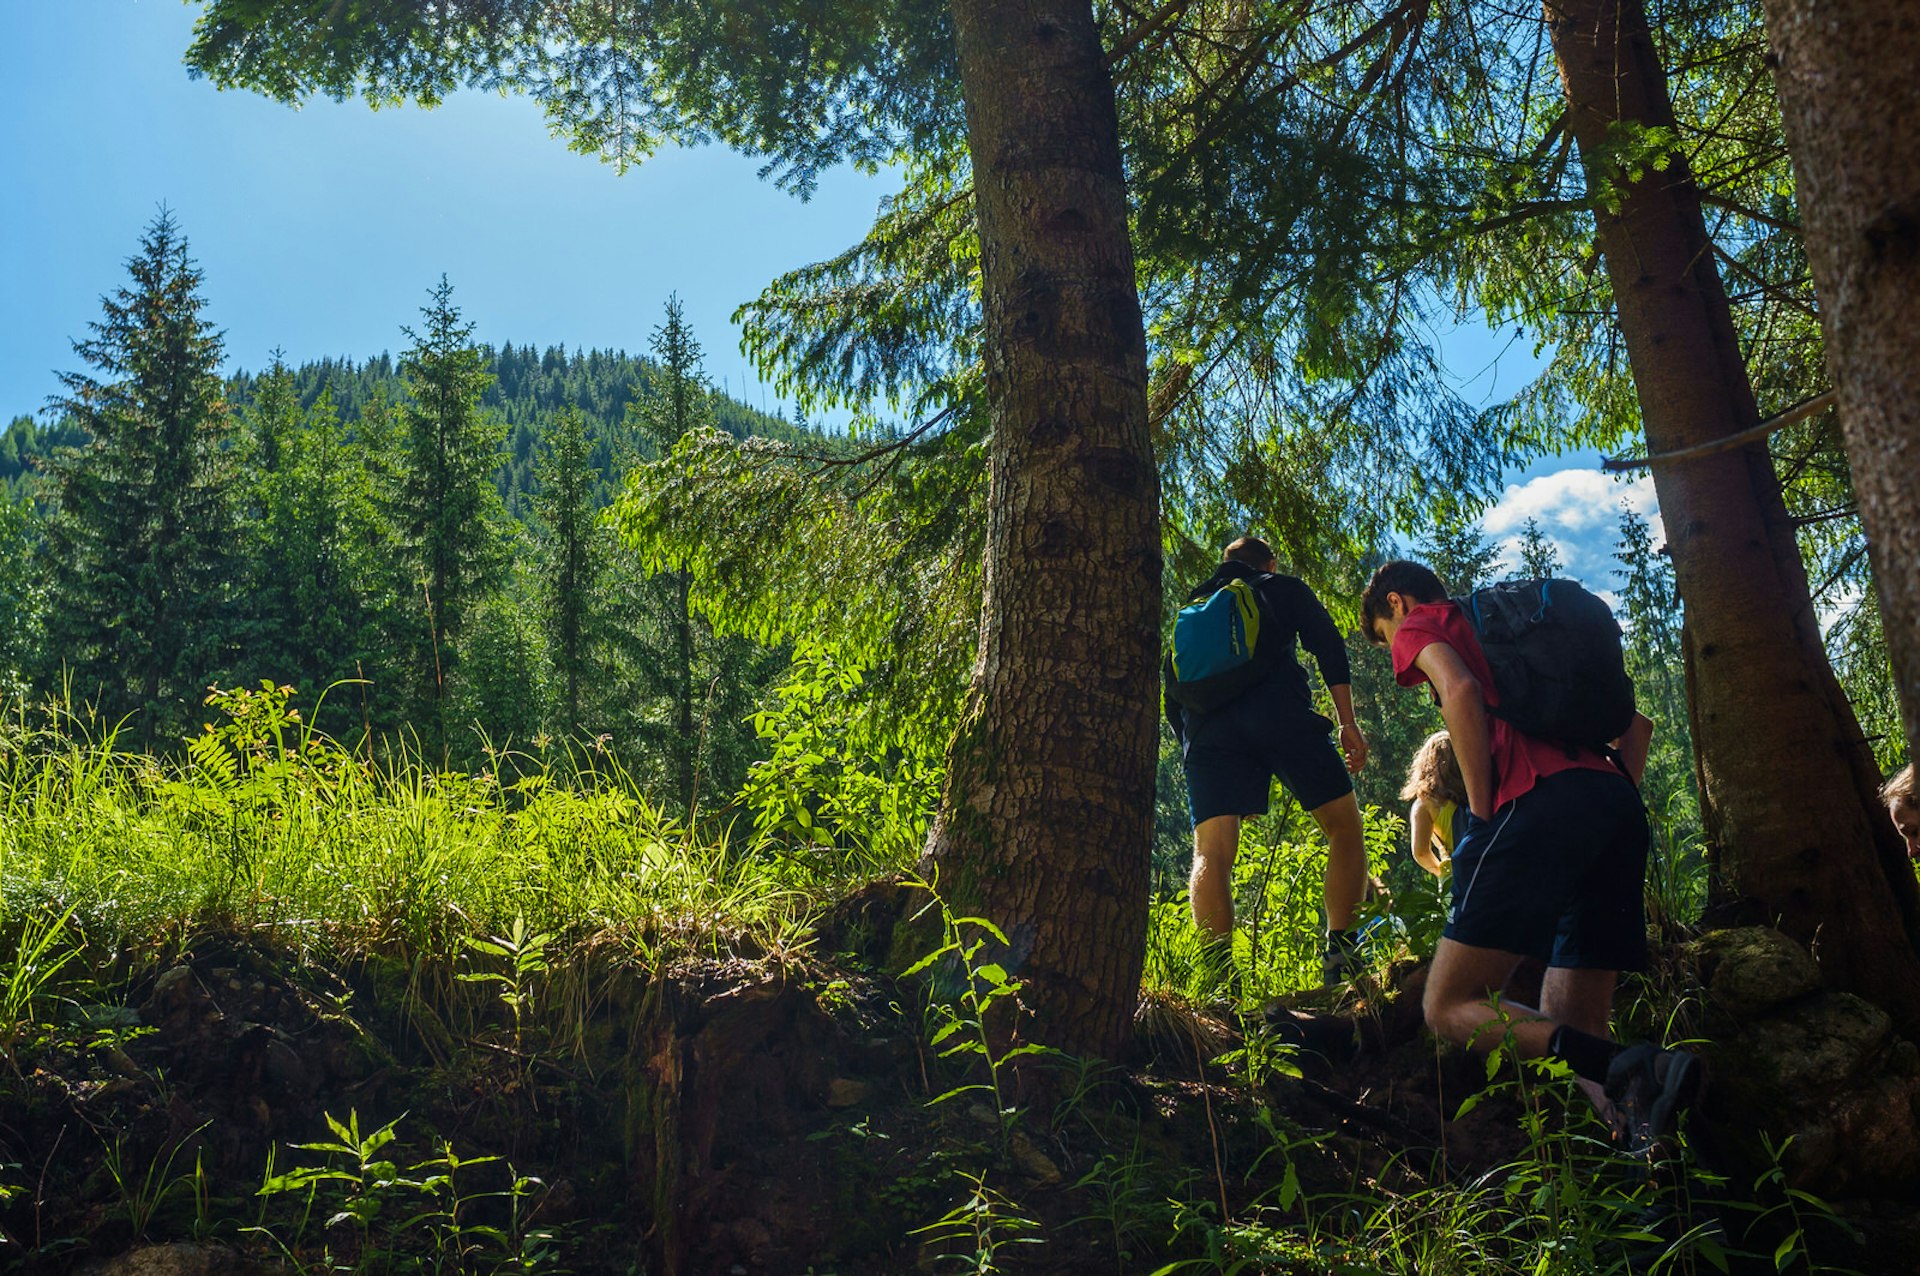 Three young hikers walking through lush, green pine trees